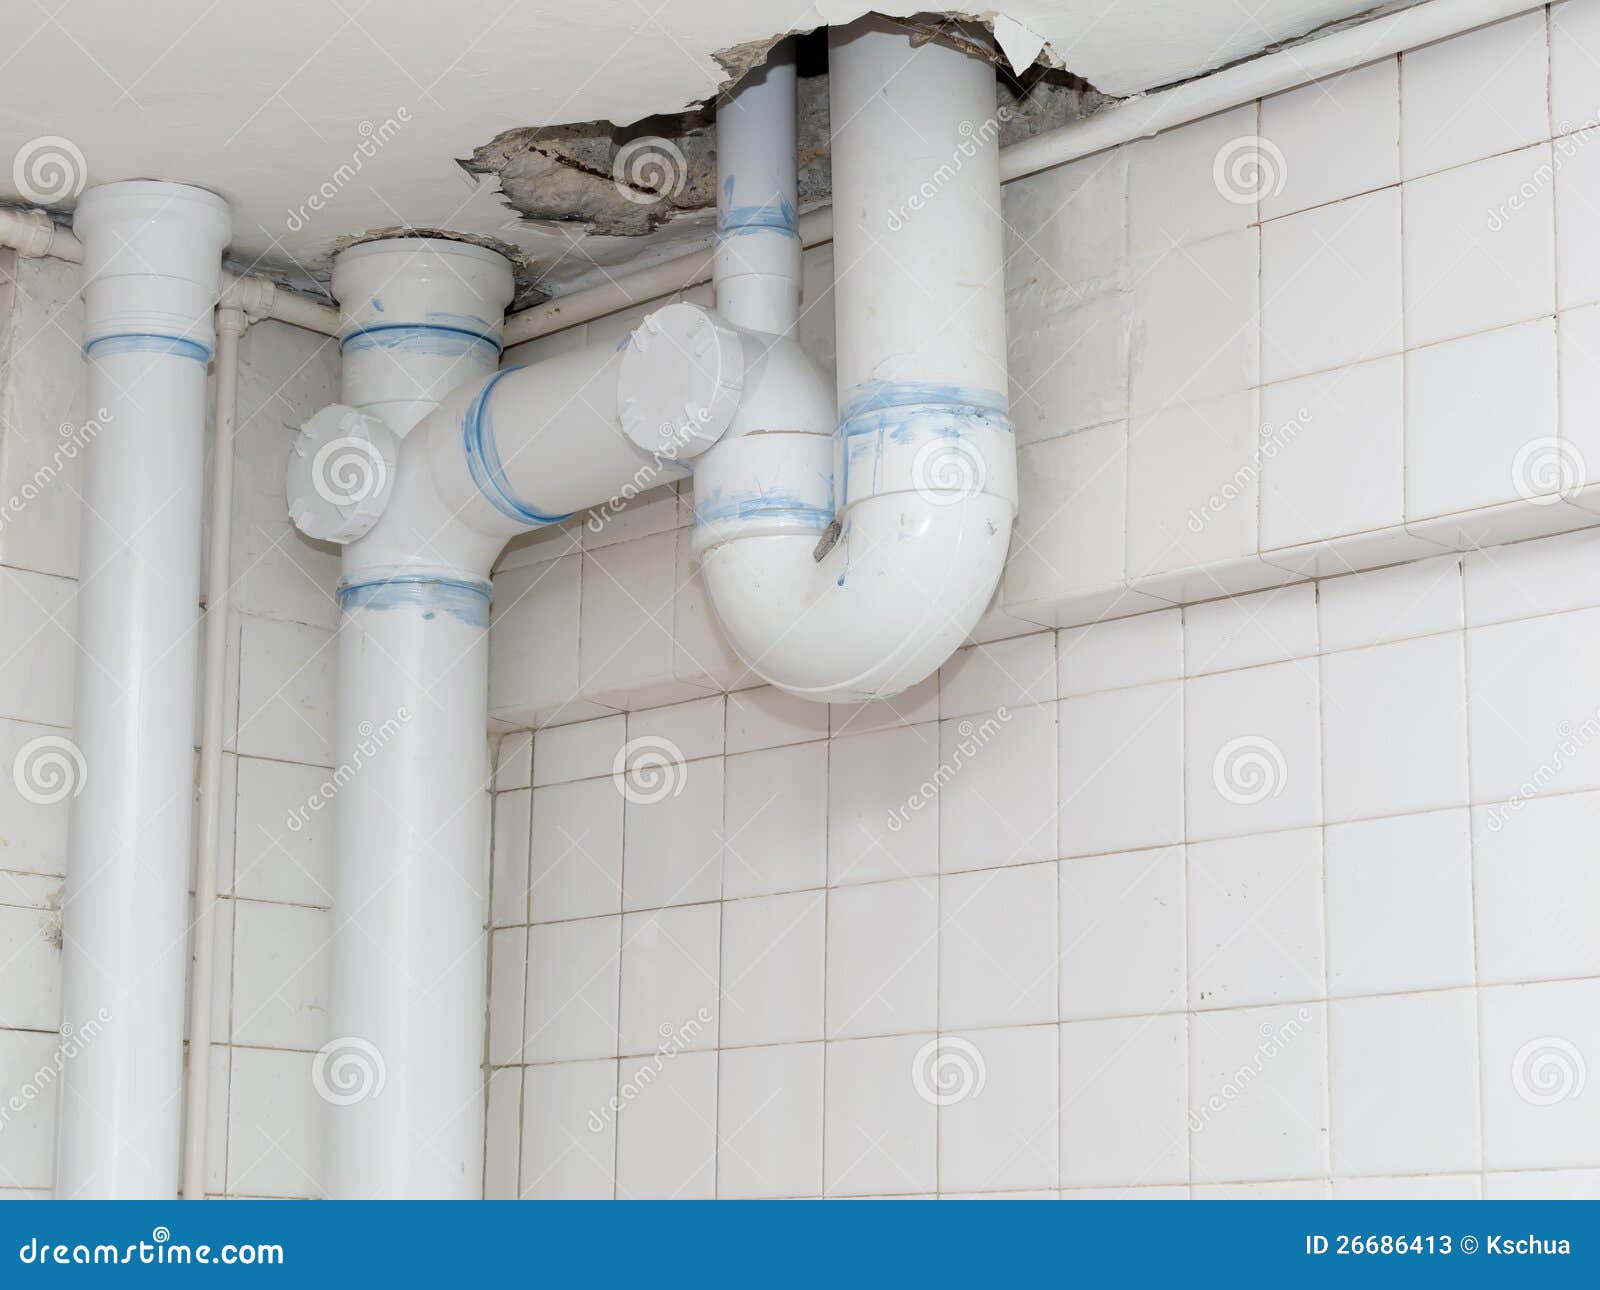 sanitation pipes